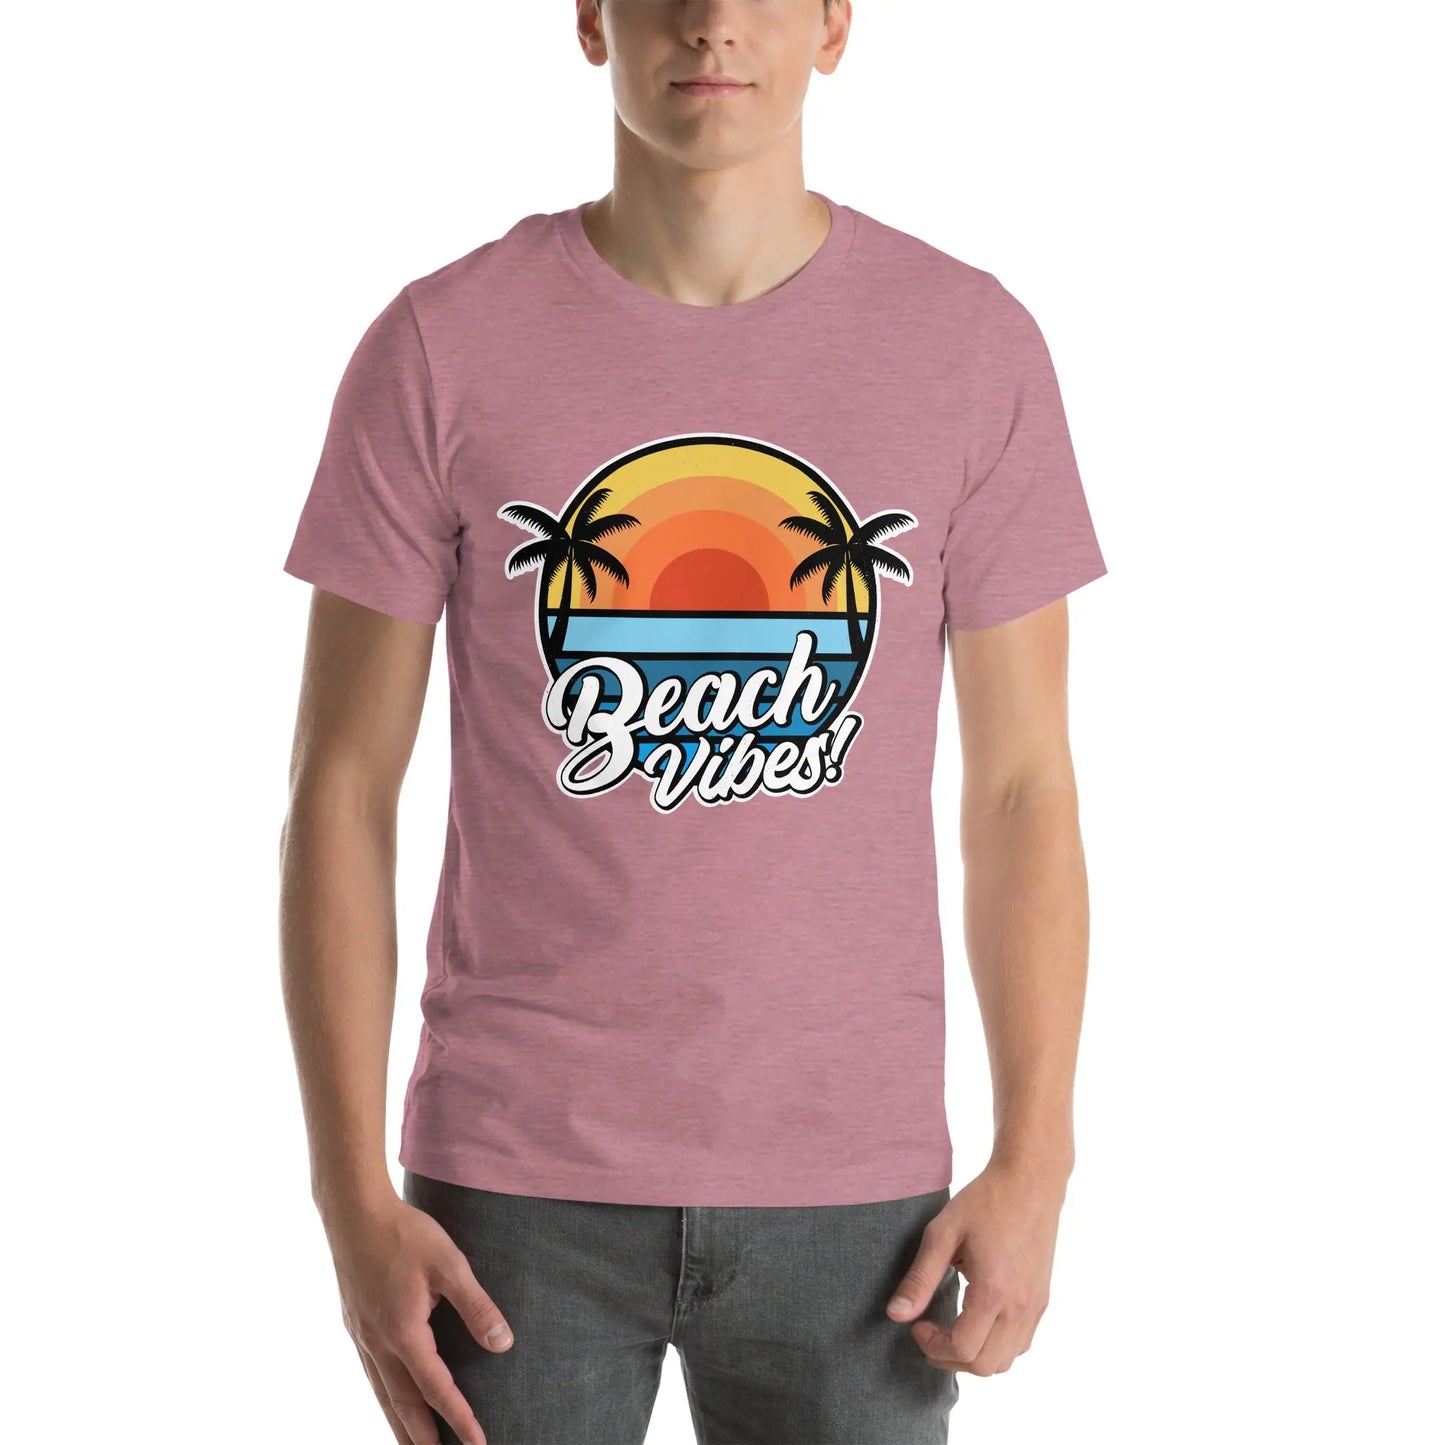 Beach Vibes with this Coastal Adult Unisex T-Shirt - Coastal Journeyz9496443_10352